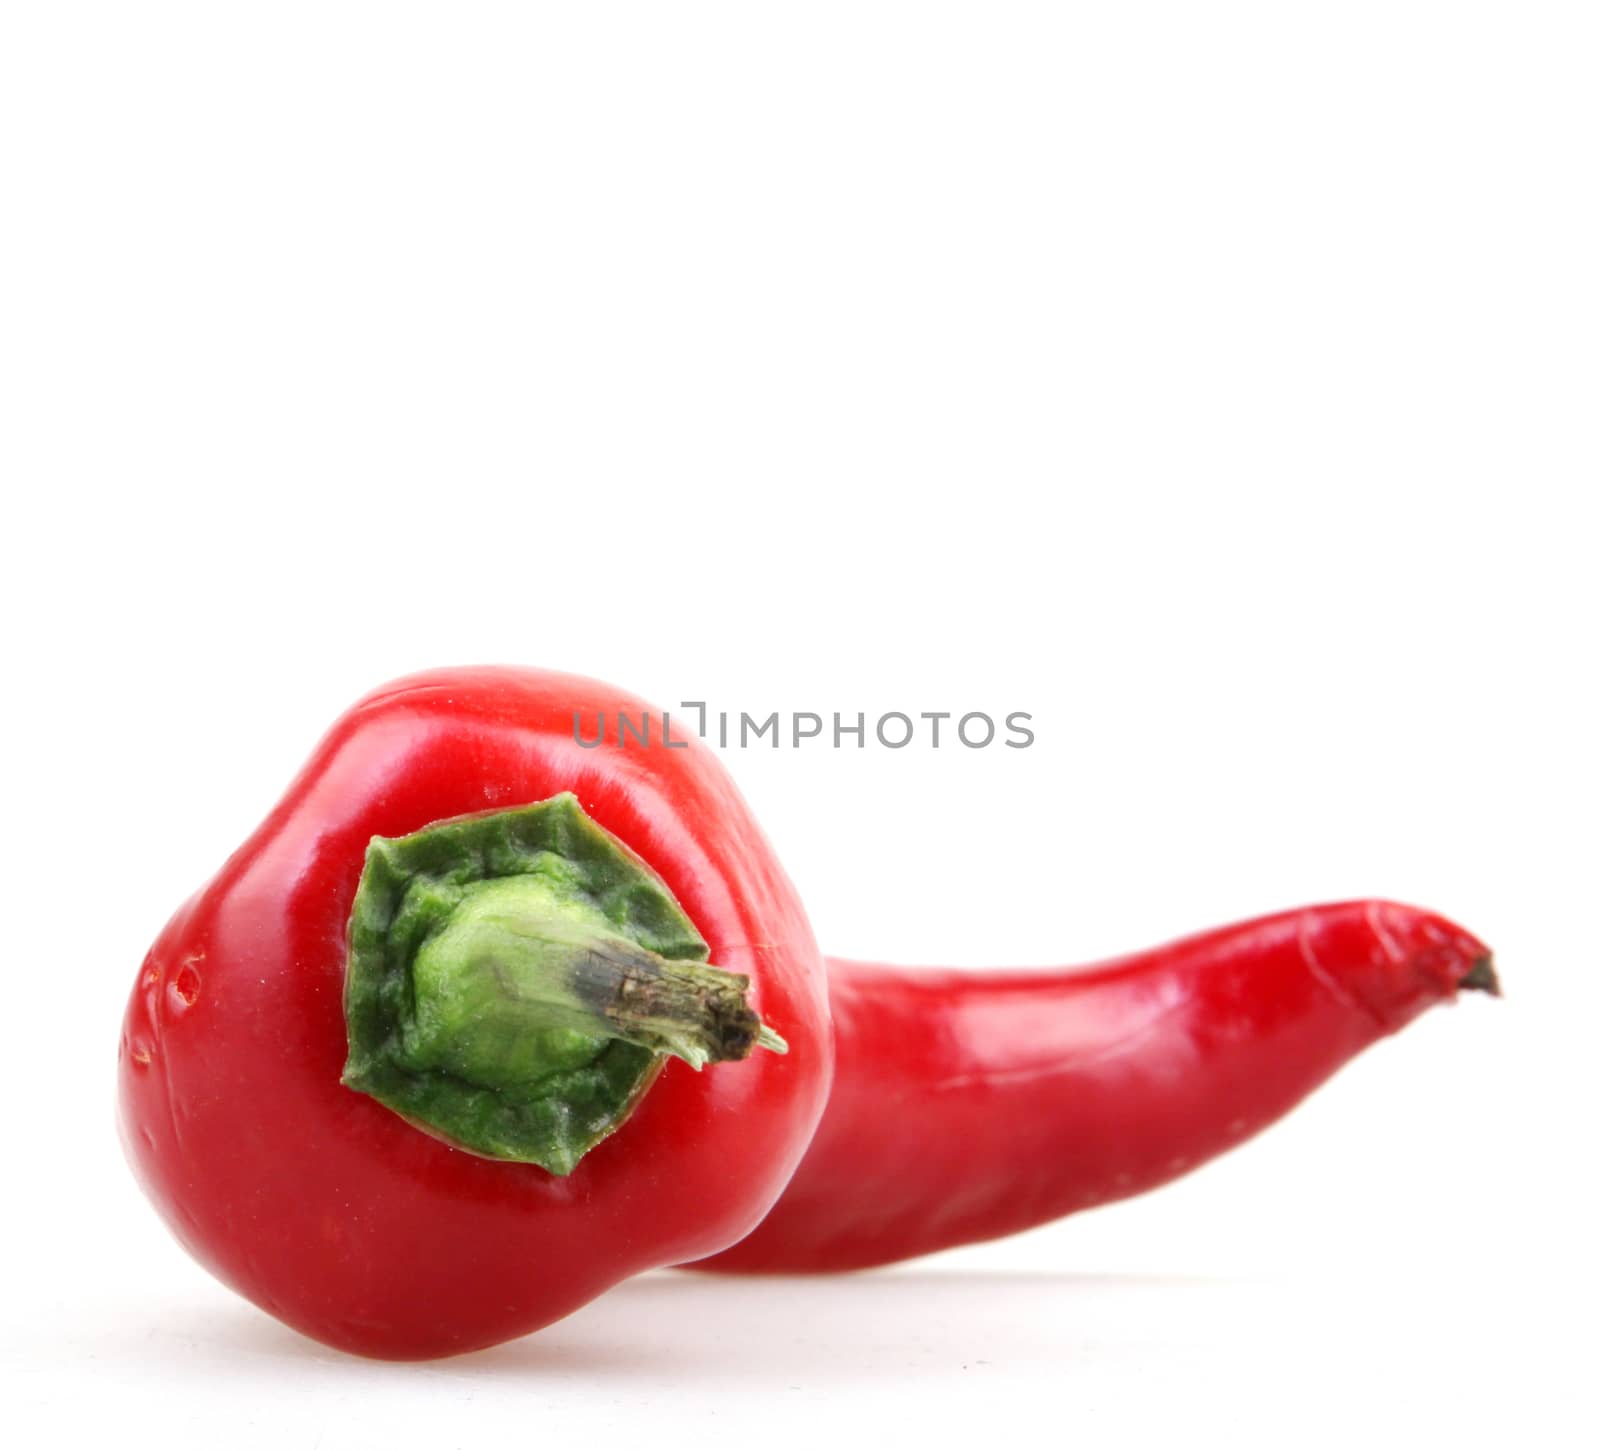 Red pepper on white background by nenov